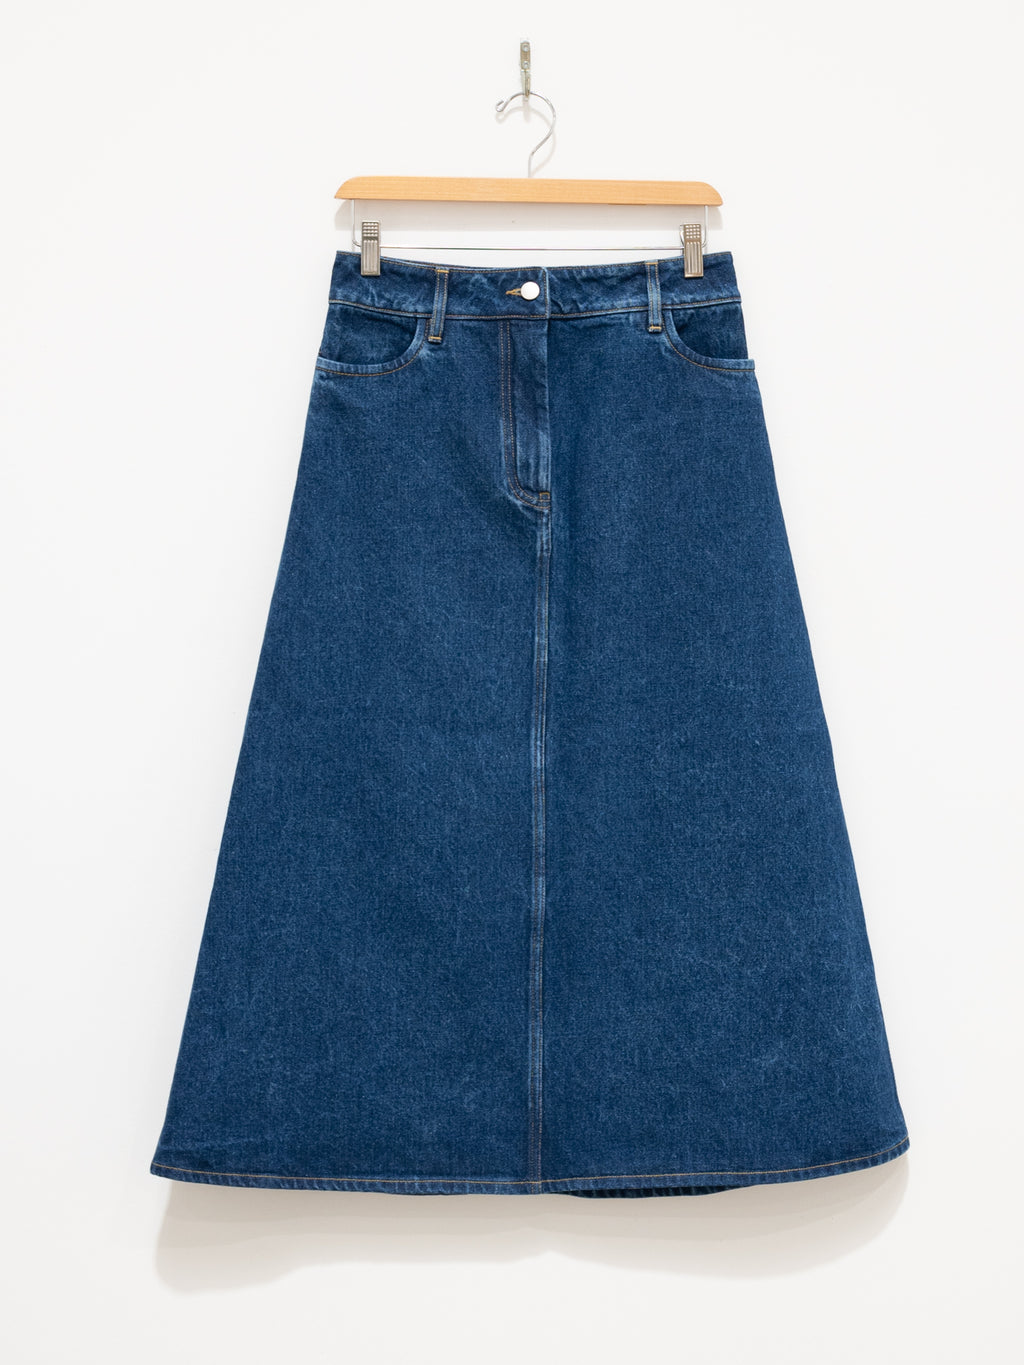 Namu Shop - Studio Nicholson Baringo A-Line Denim Skirt - Indigo